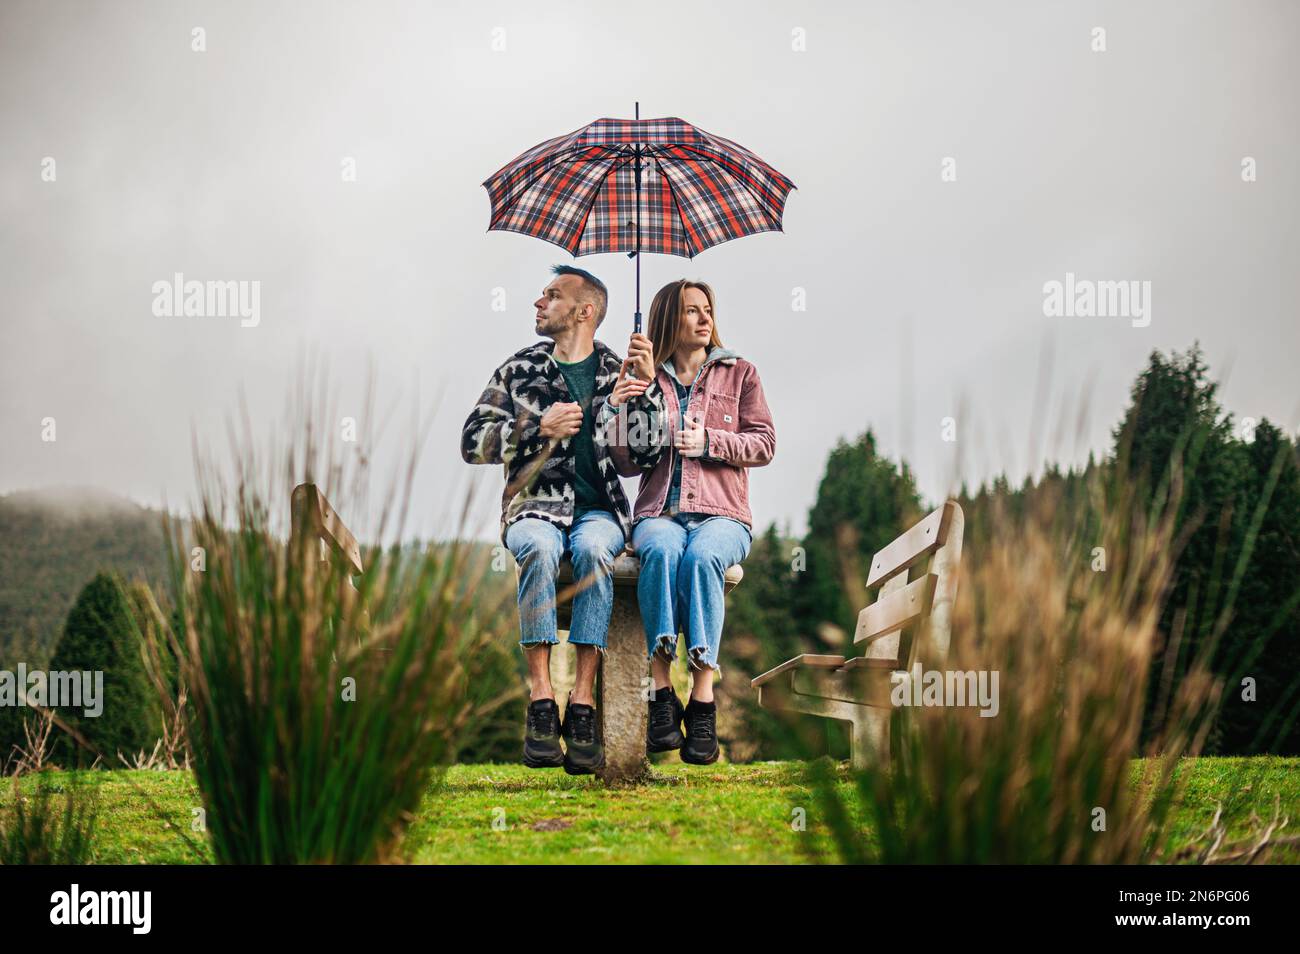 Under the Umbrella, Two Hearts in Harmony Stock Photo